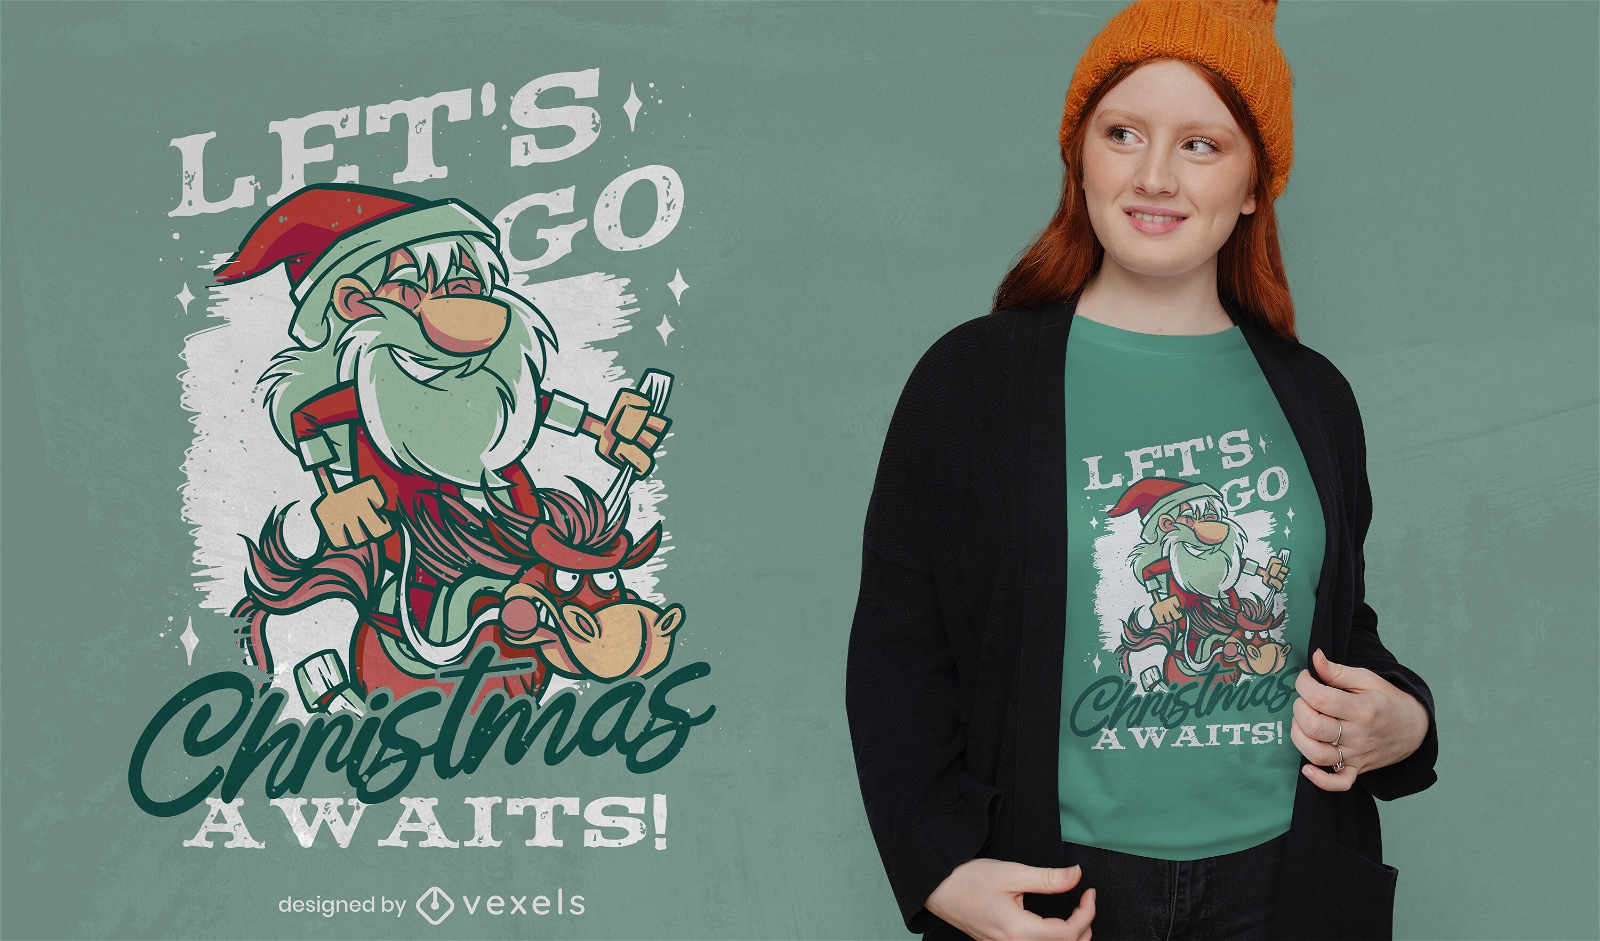 Christmas awaits t-shirt design